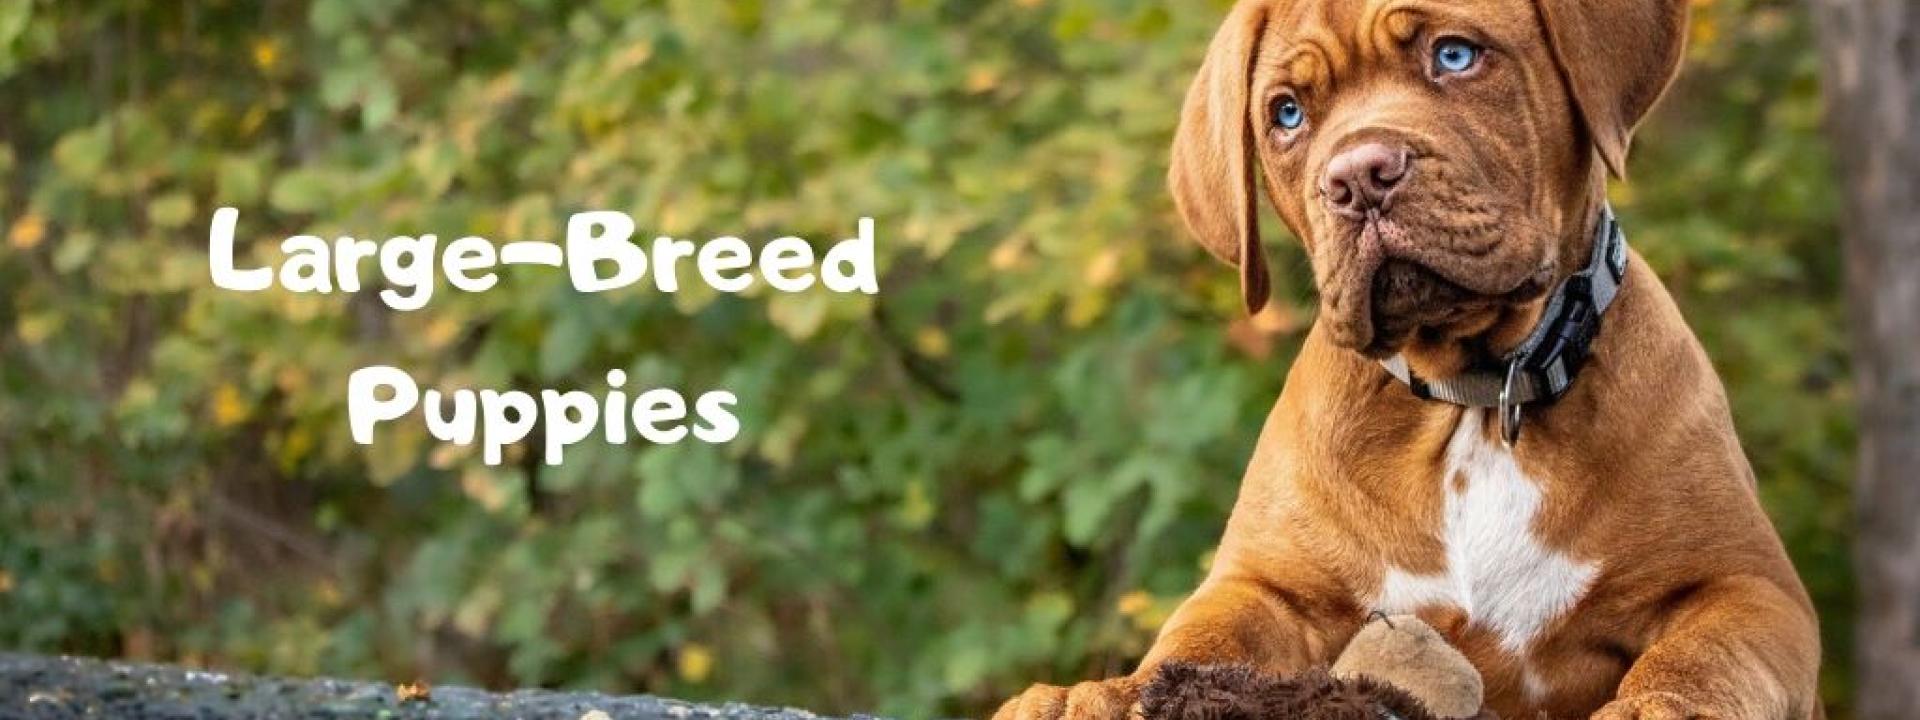 large-breed-puppies-blog-header